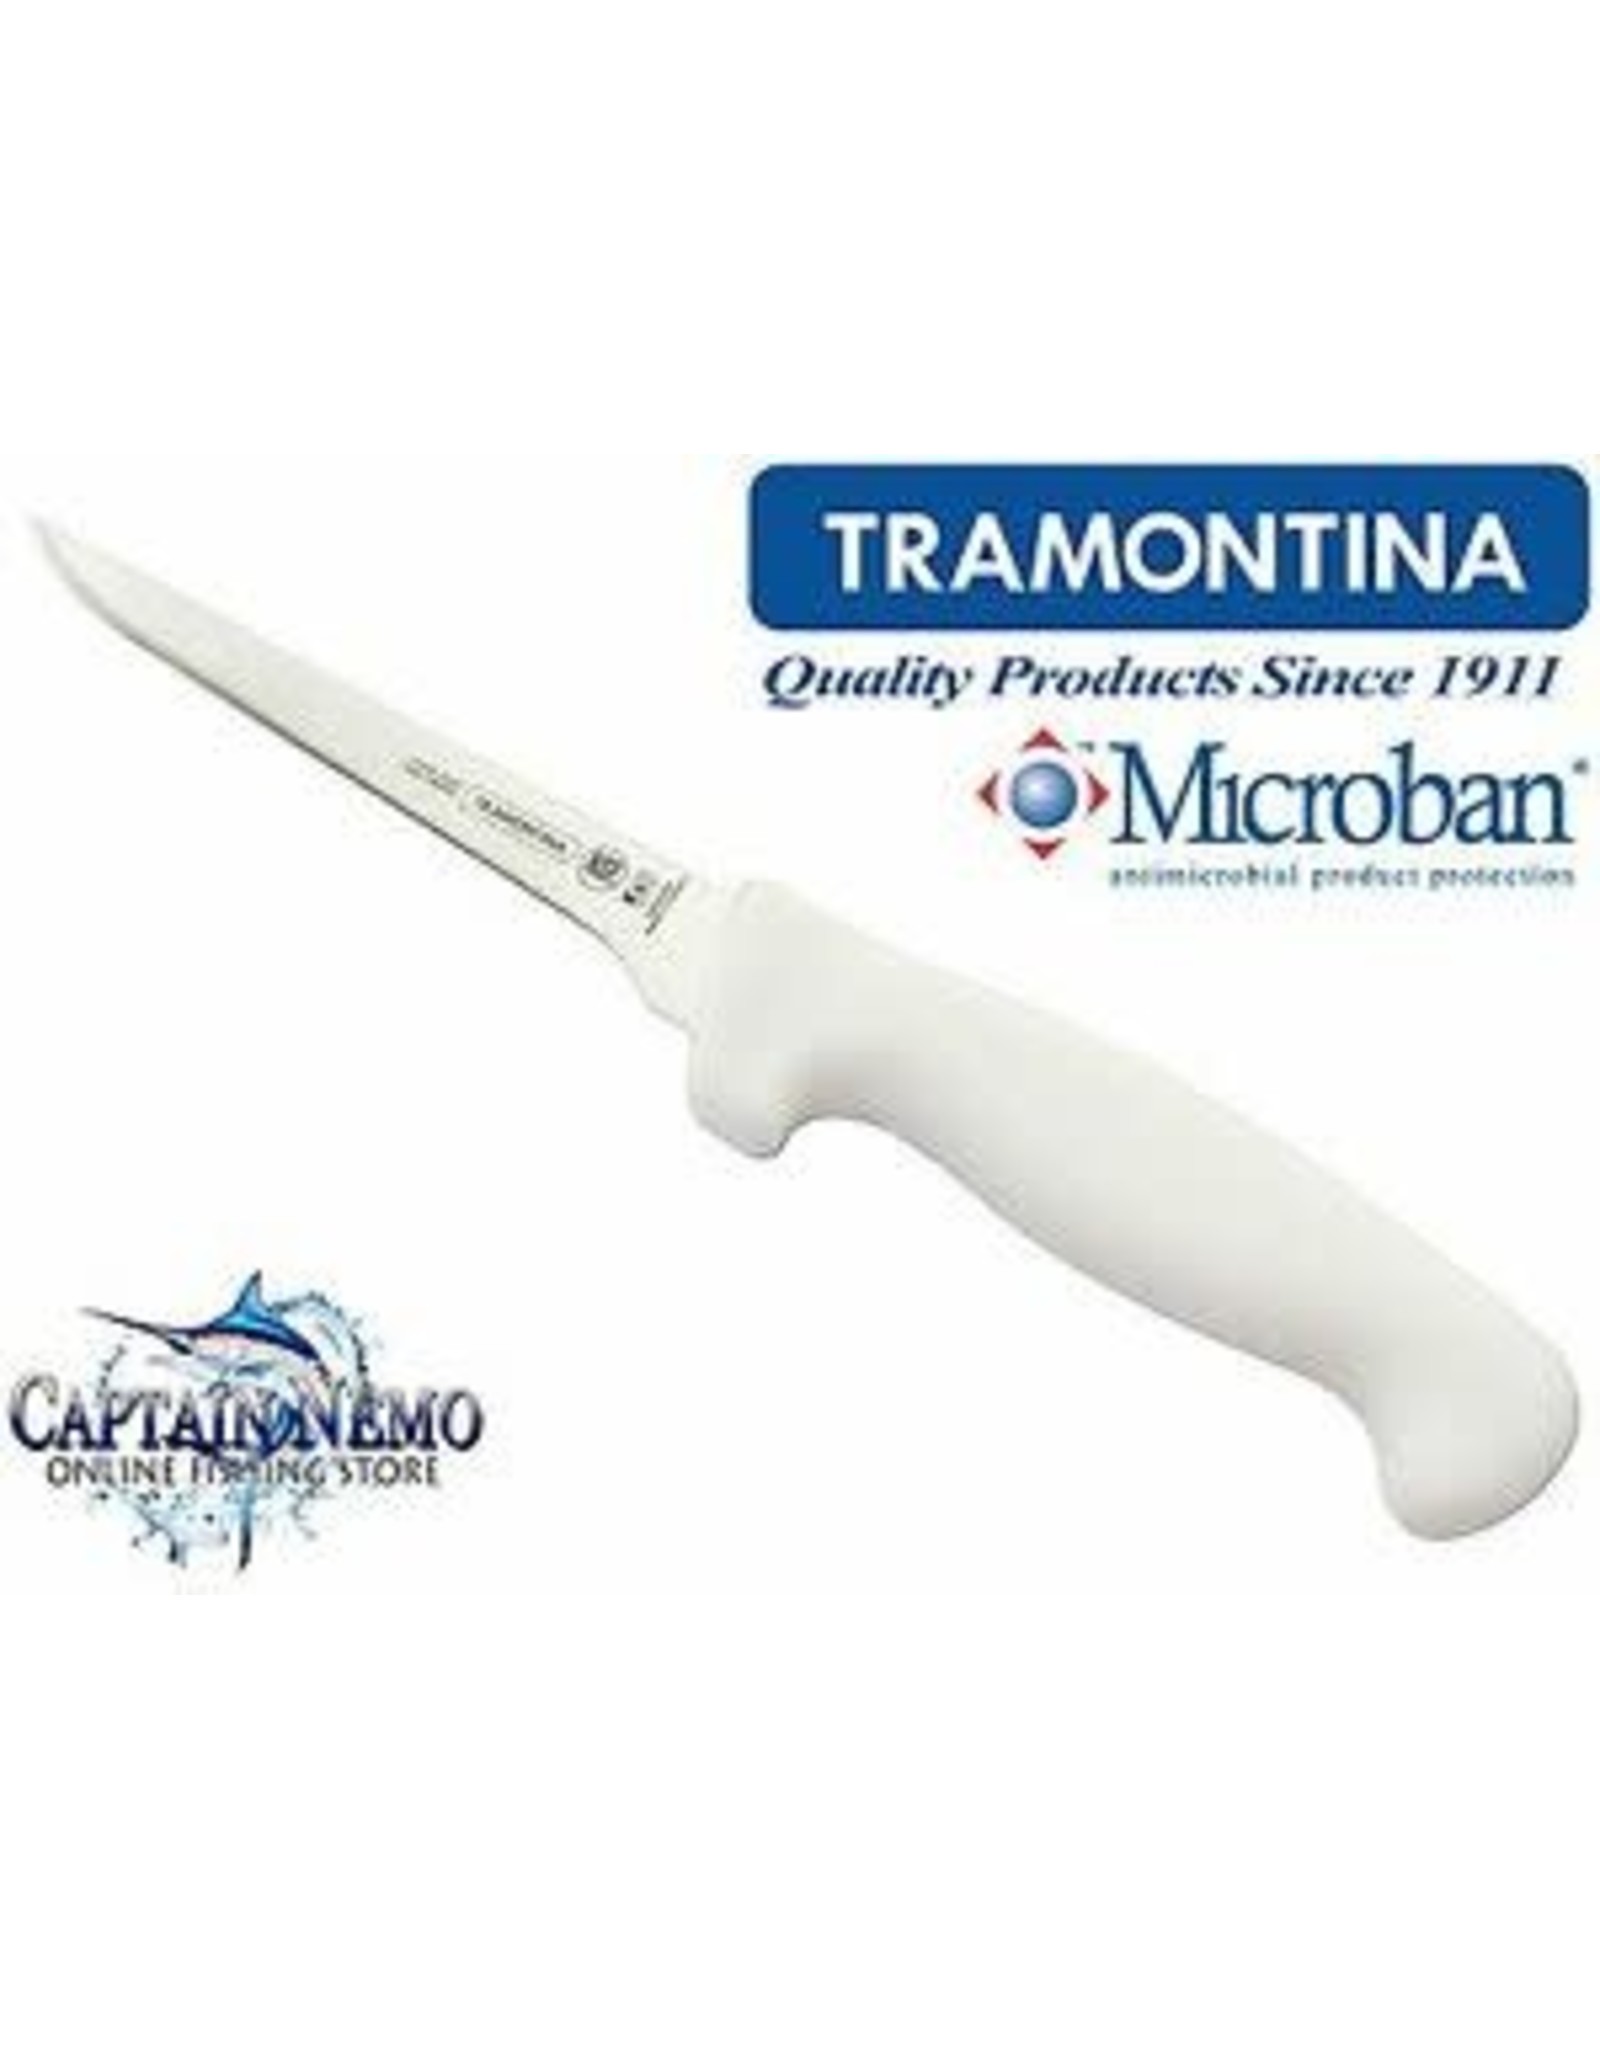 TRAMONTINA TRAM 6" STAINLESS STEEL BONING FIXED KNIFE WHITE